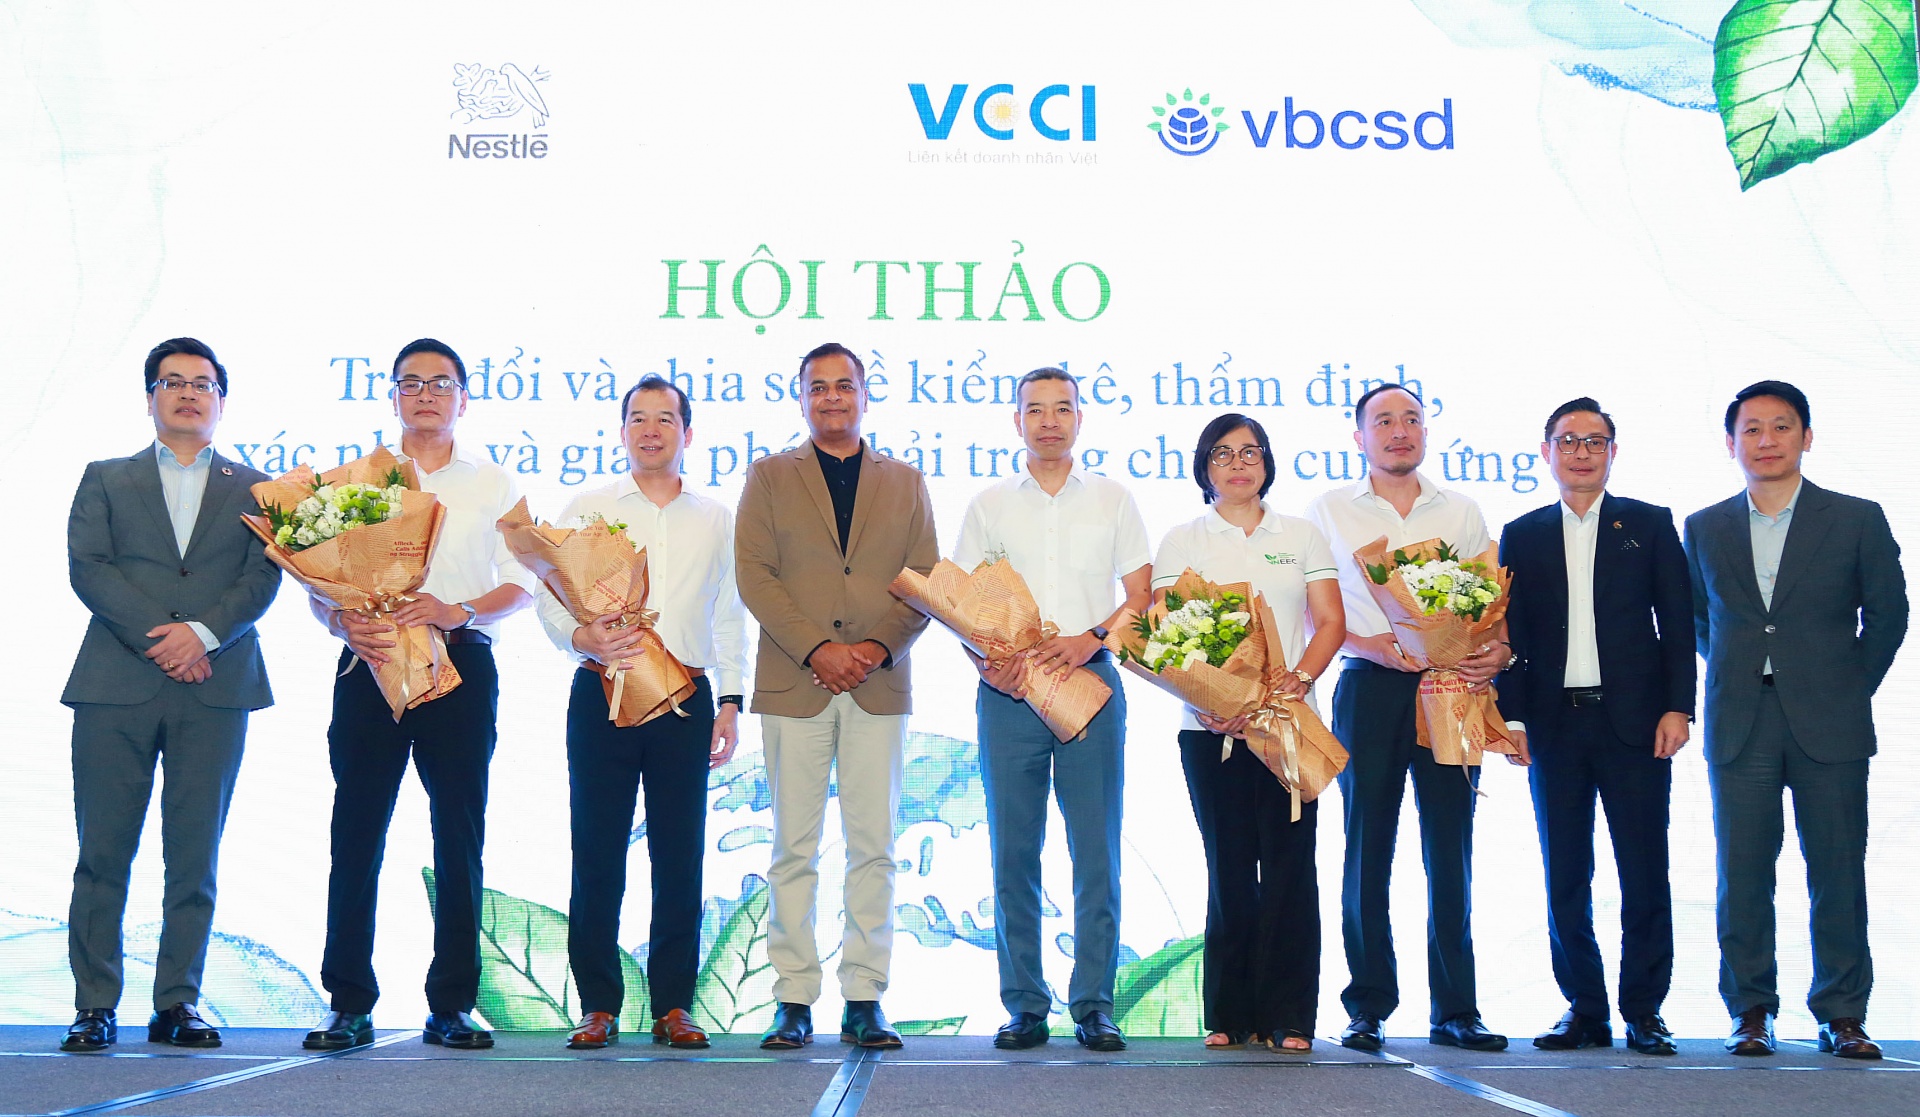 nestle vietnam promotes initiatives on emission reduction